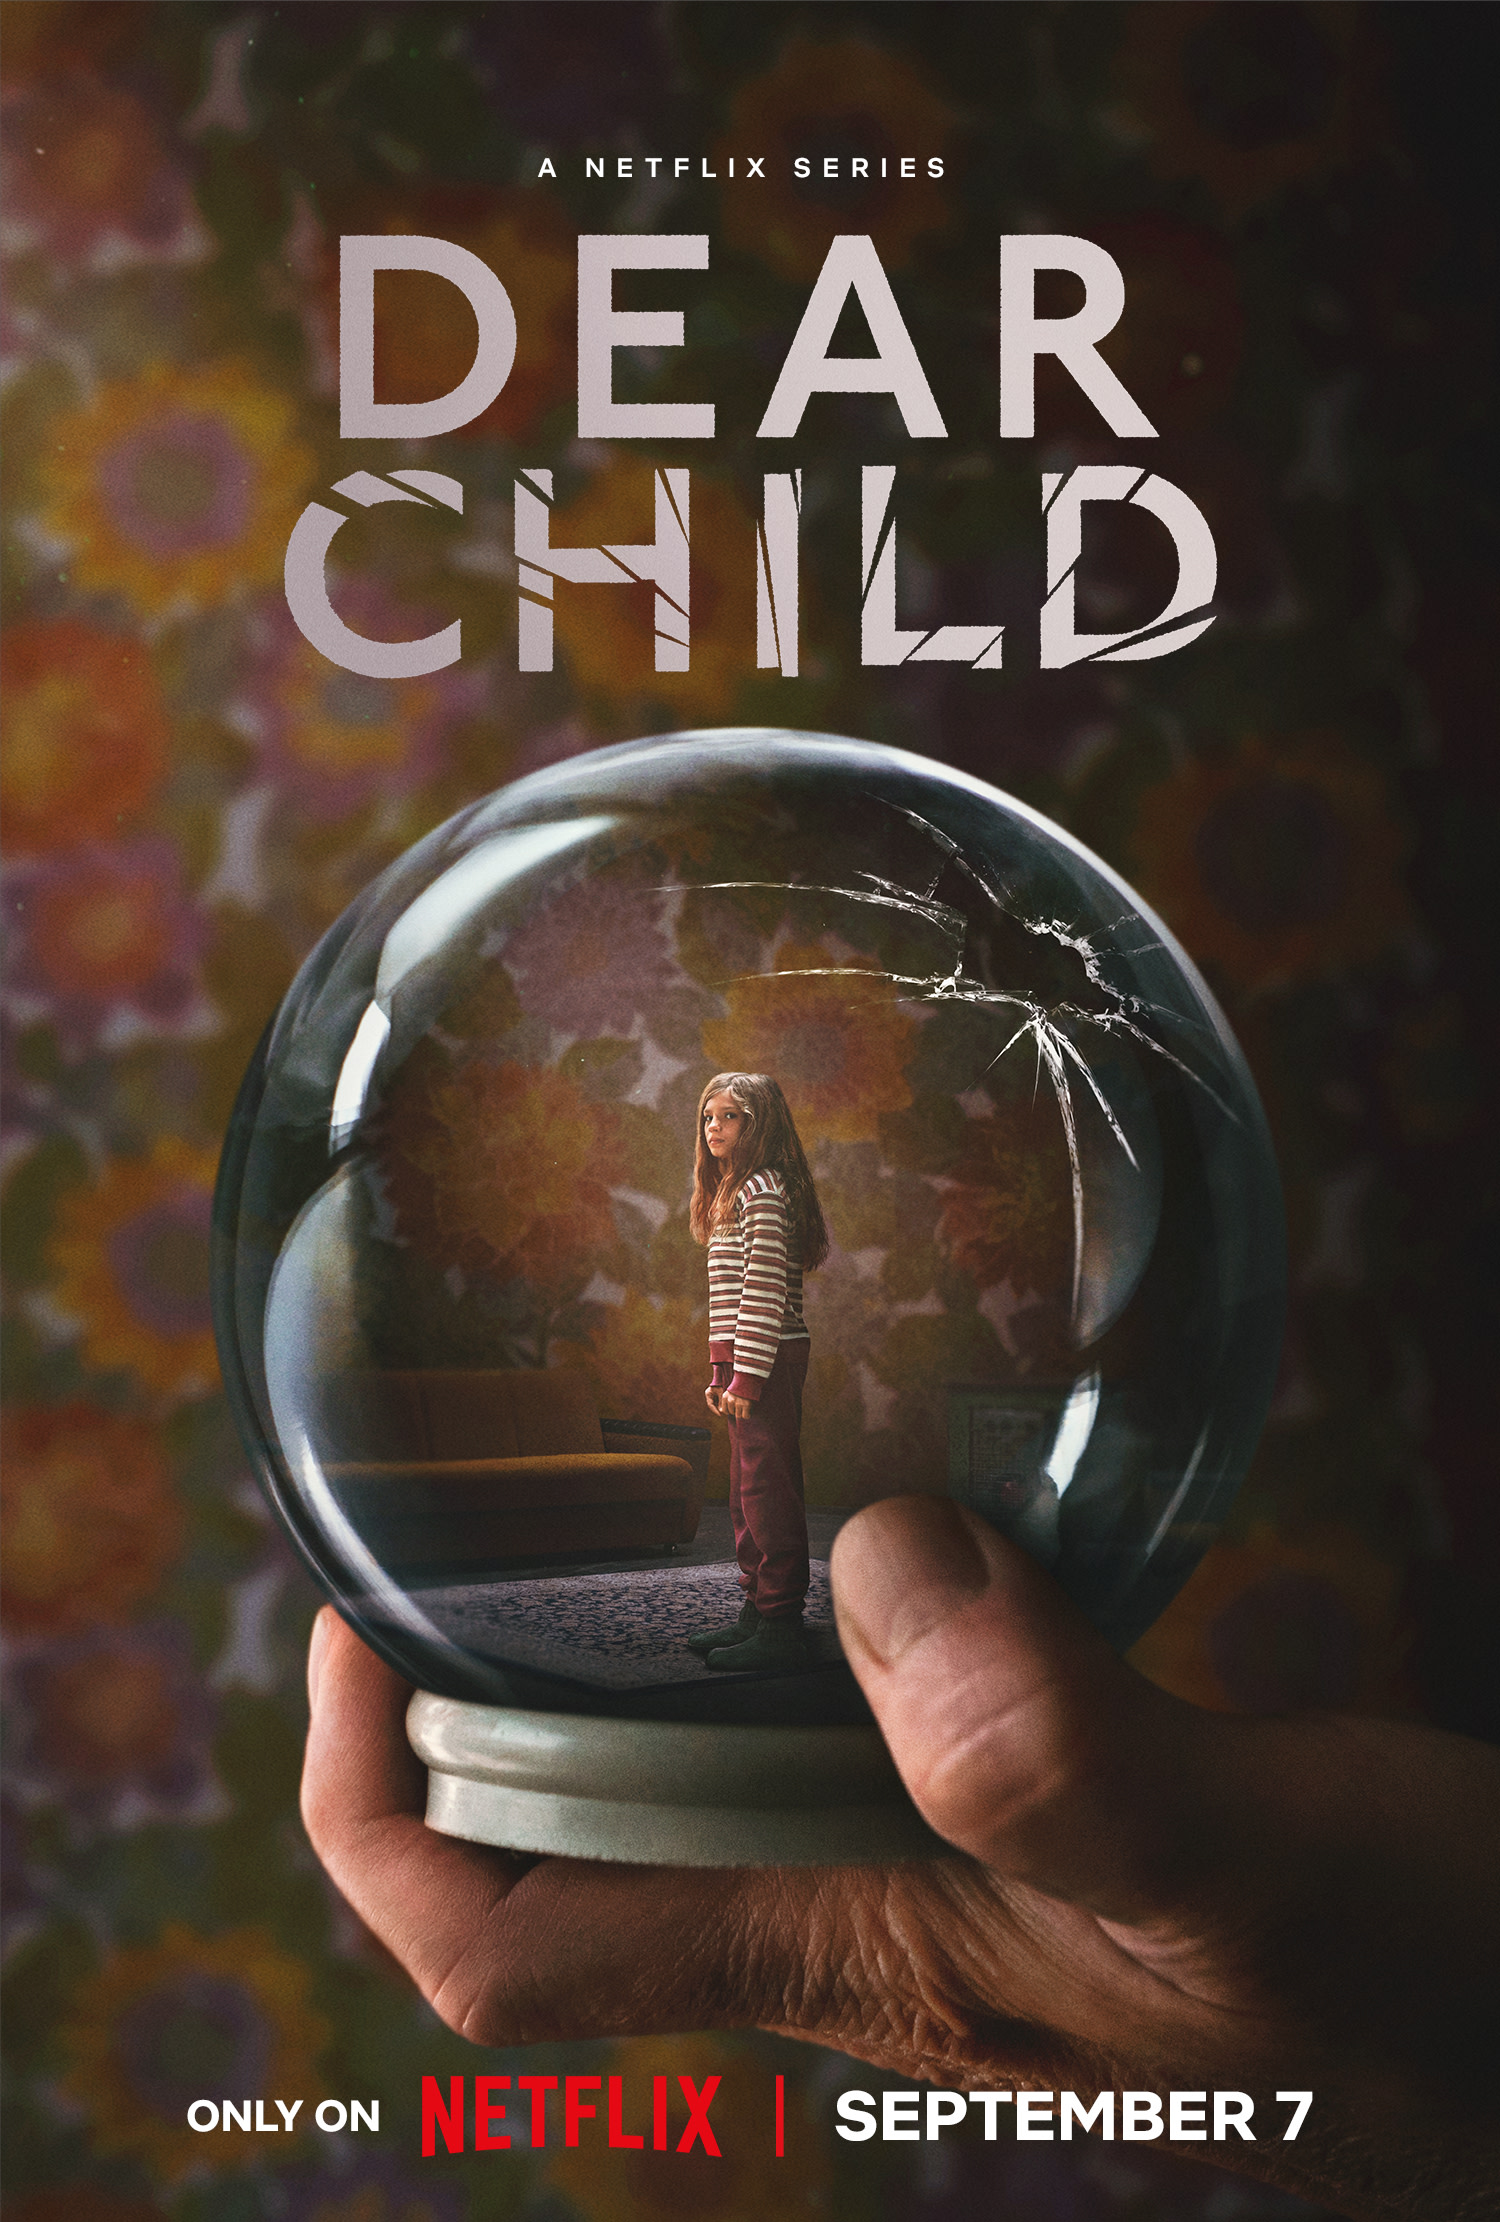 Six-part Mini Series "Dear Child" Hits Netflix on September 7